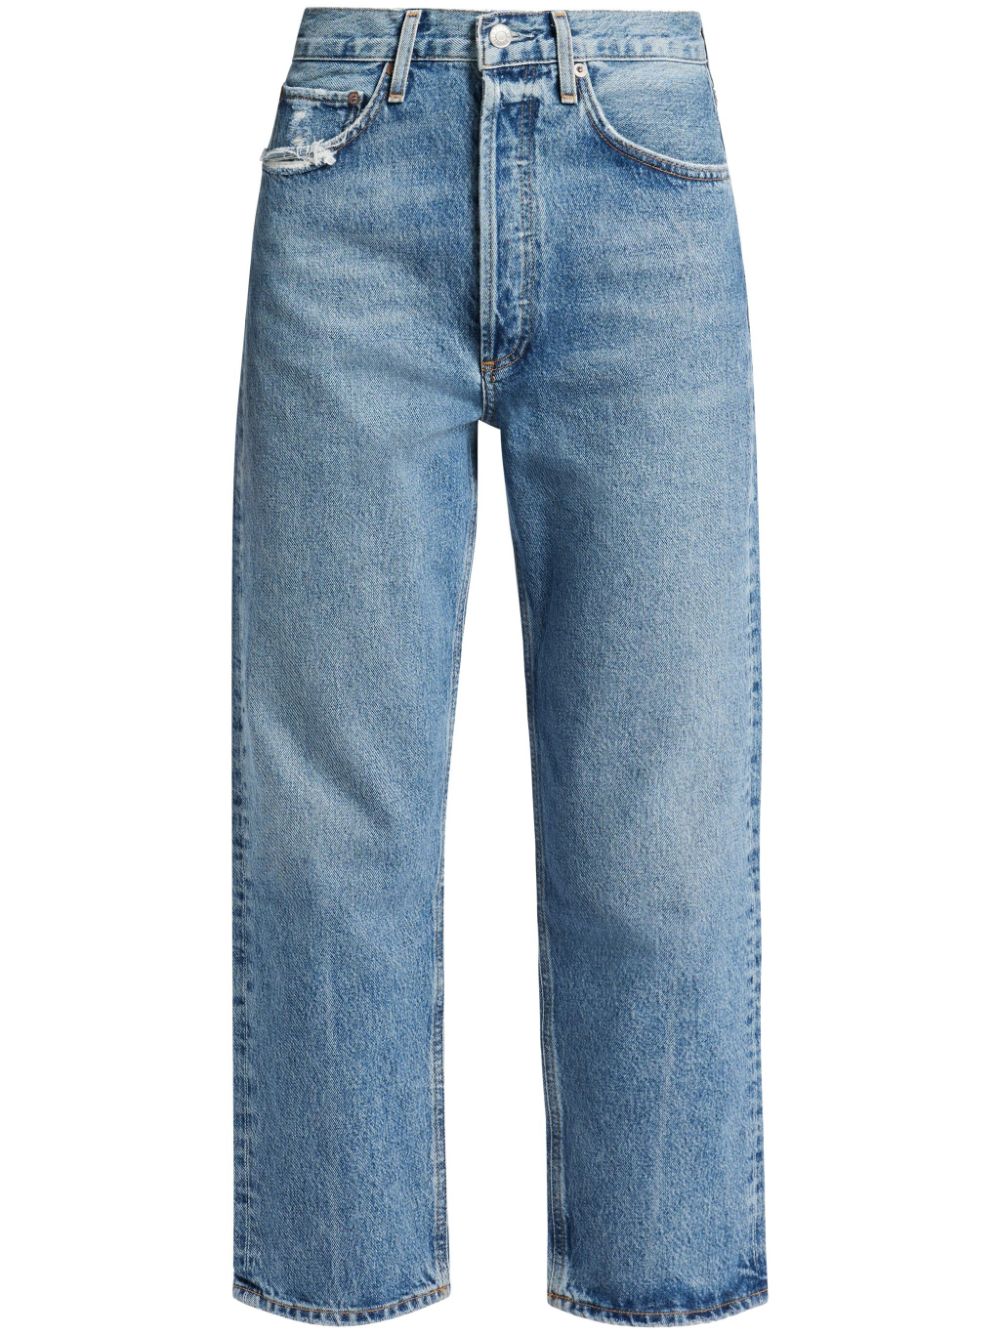 90s Crop straight-leg jeans